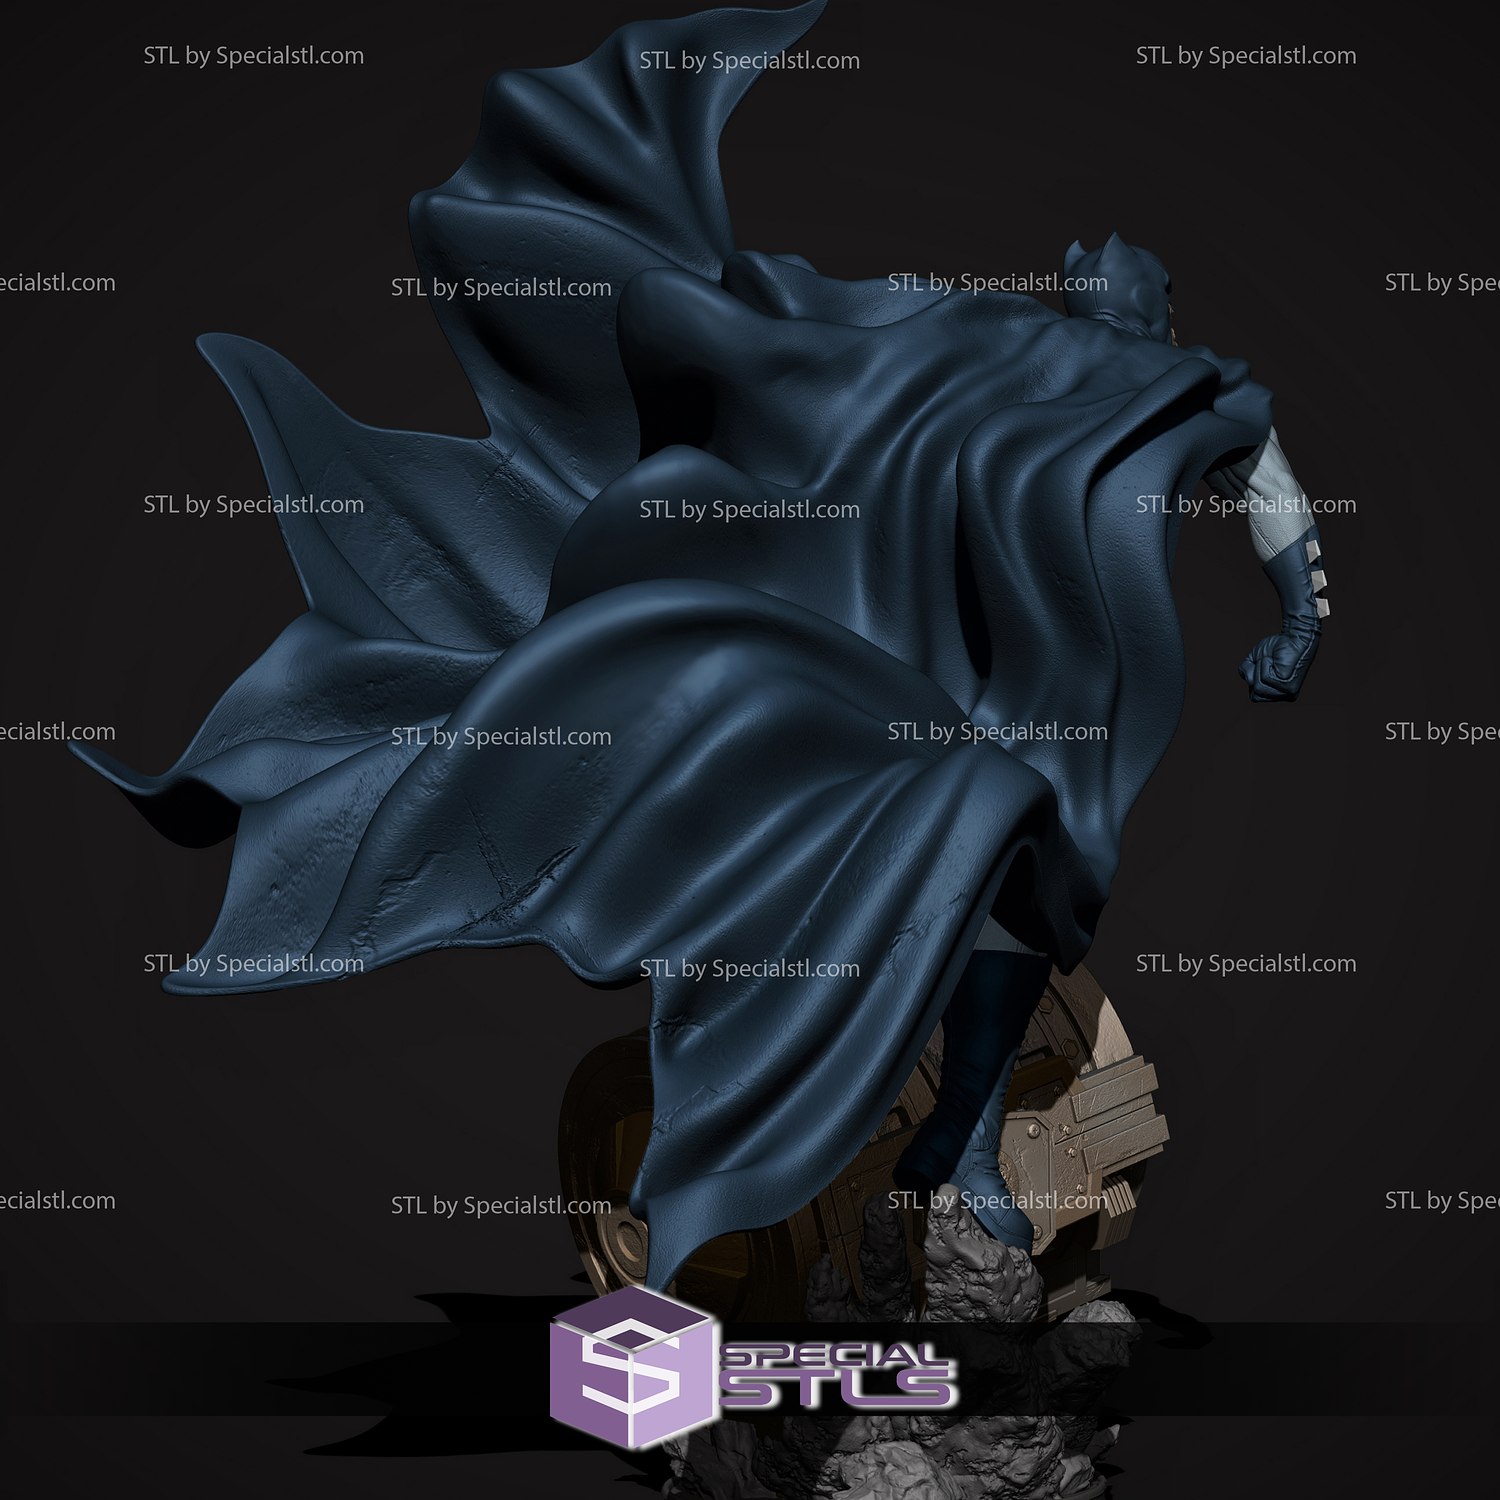 Batman and Bat Signal 3D Printing Figurine V3 from DC STL Files